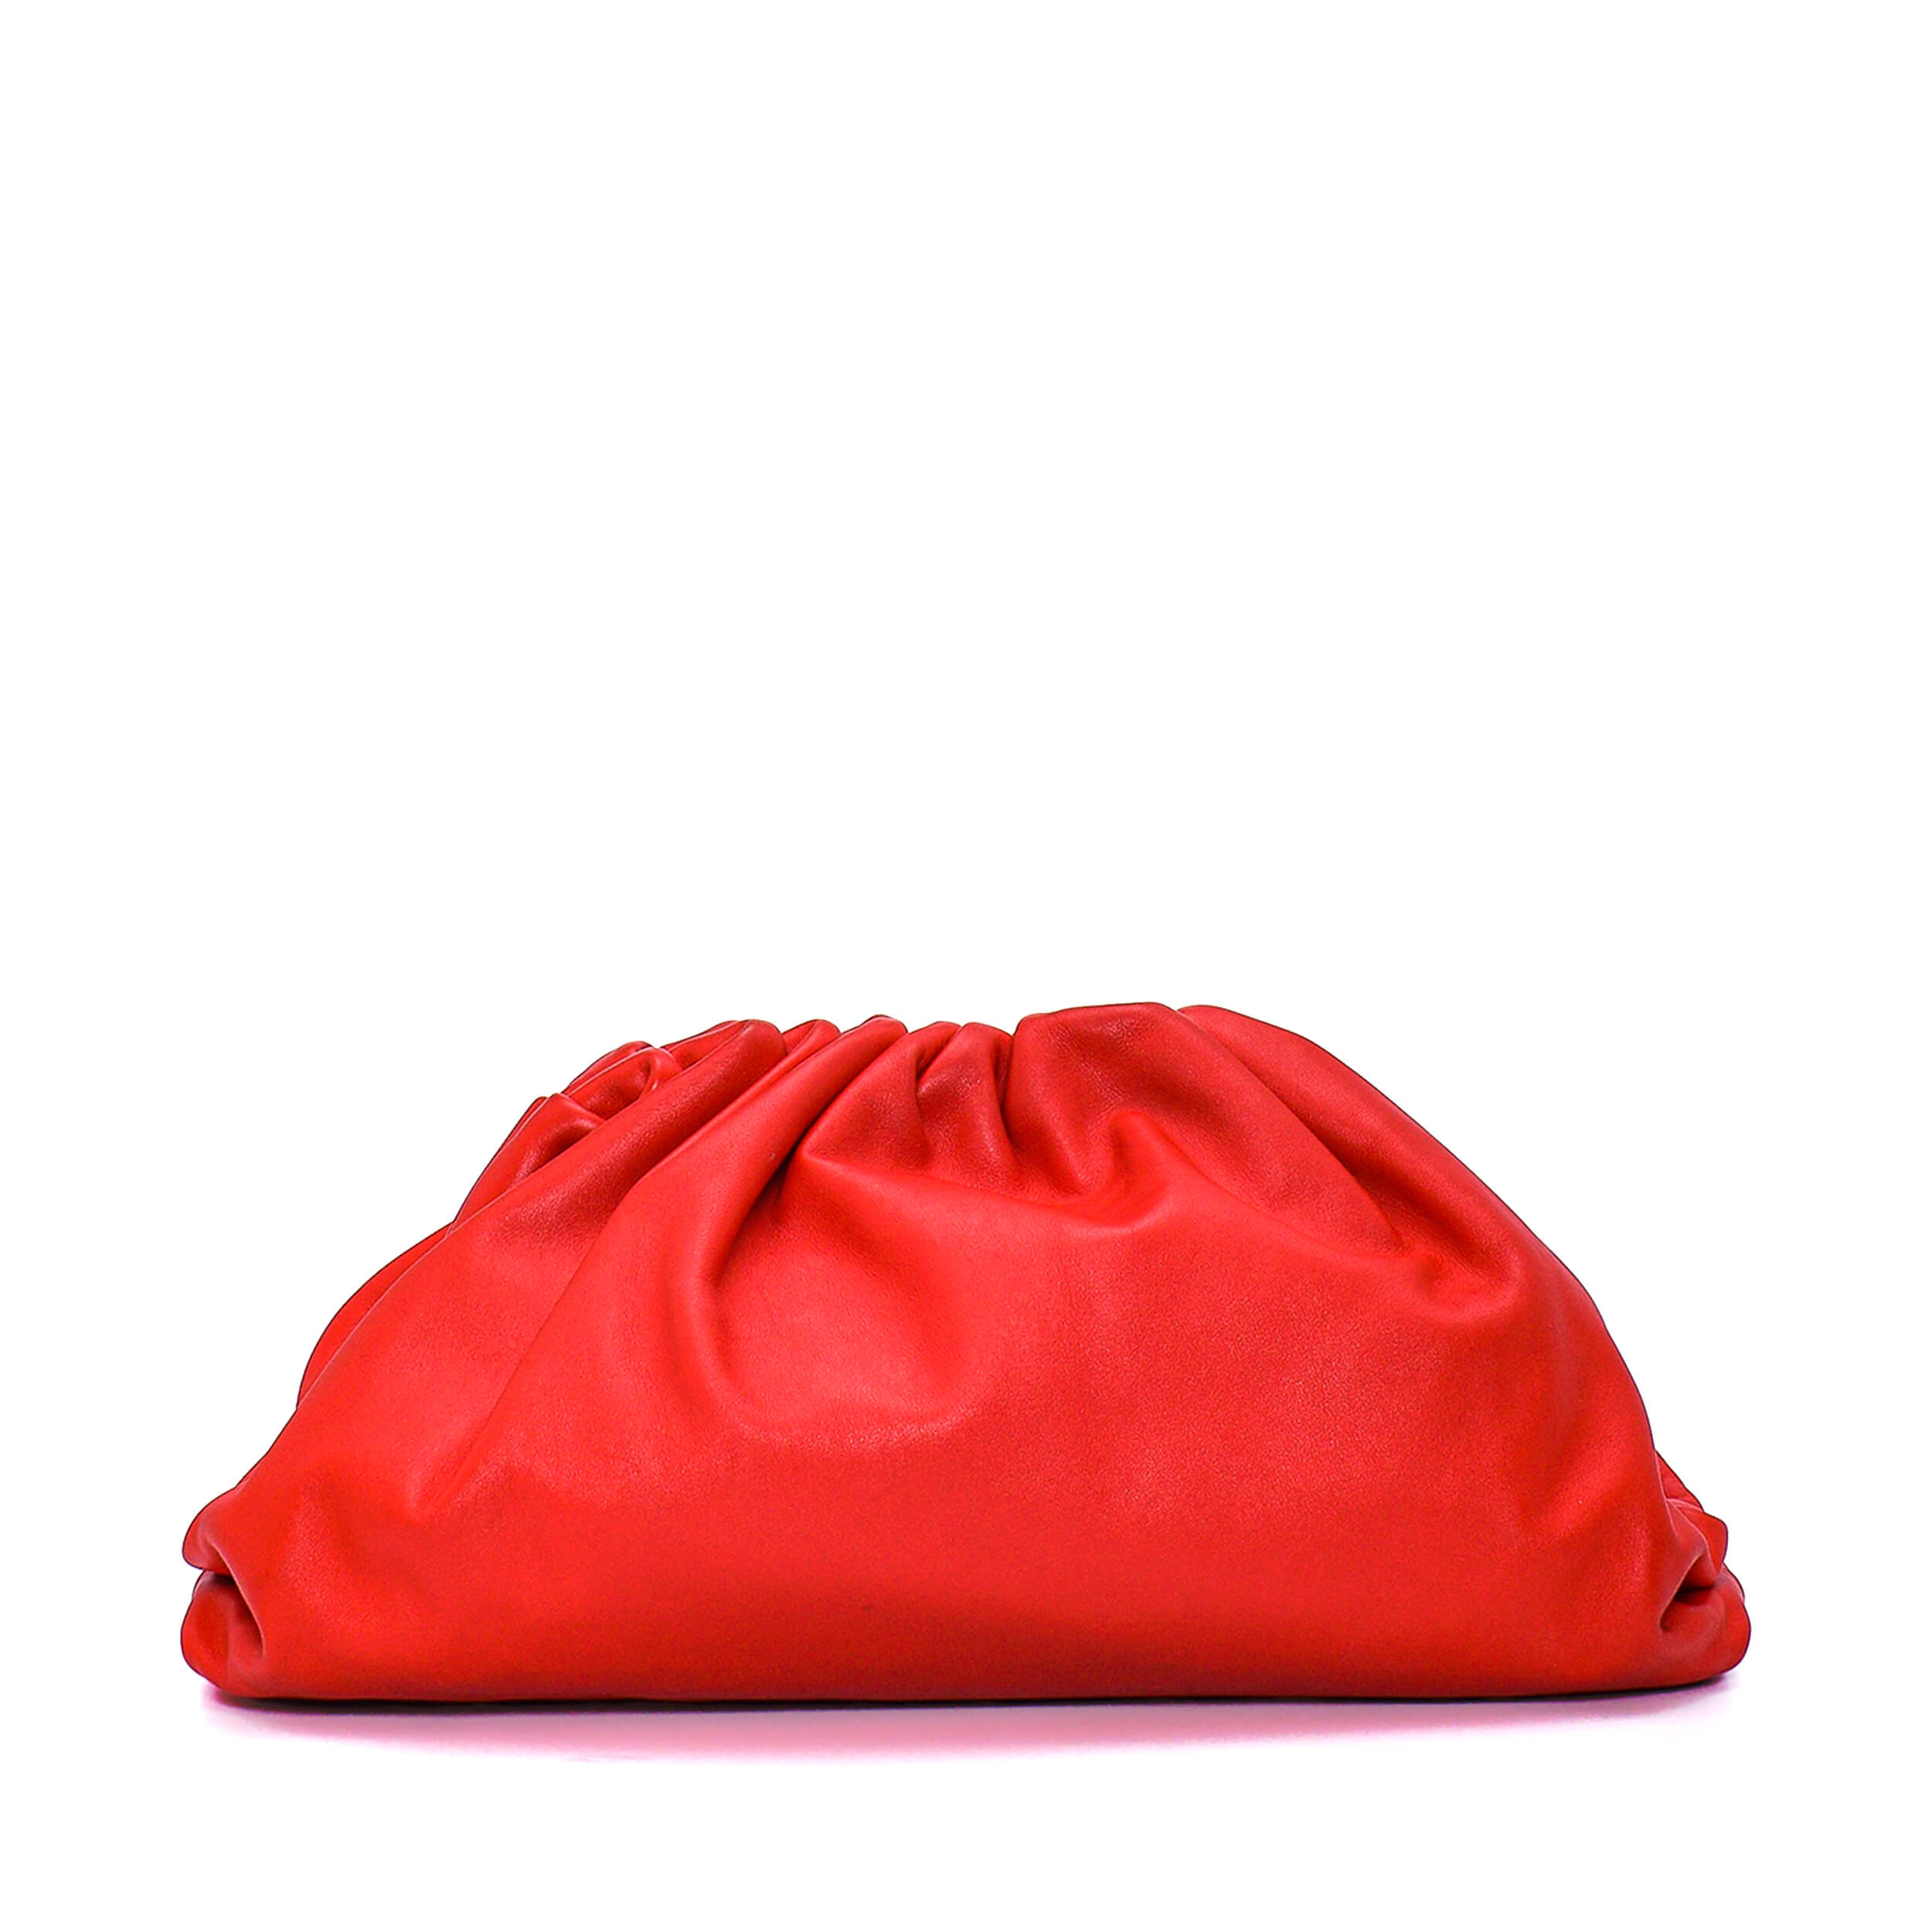 Bottega Veneta - Red Leather Pouch Bag